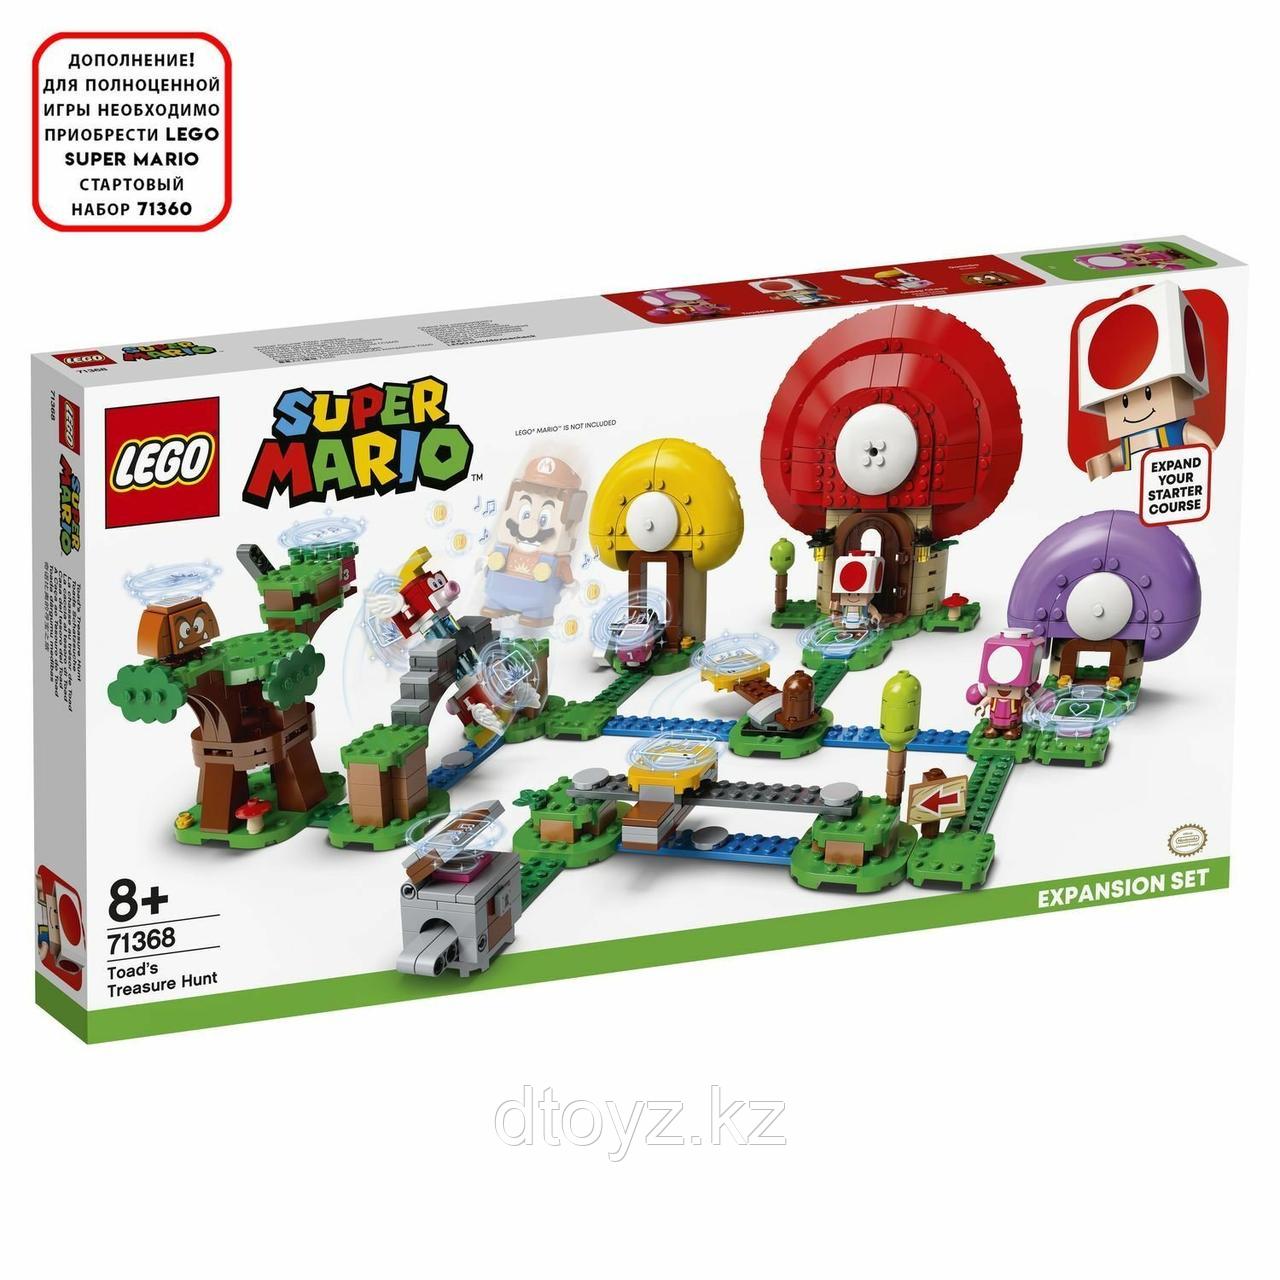 Lego Super Mario 71368 Погоня за сокровищами Тоада